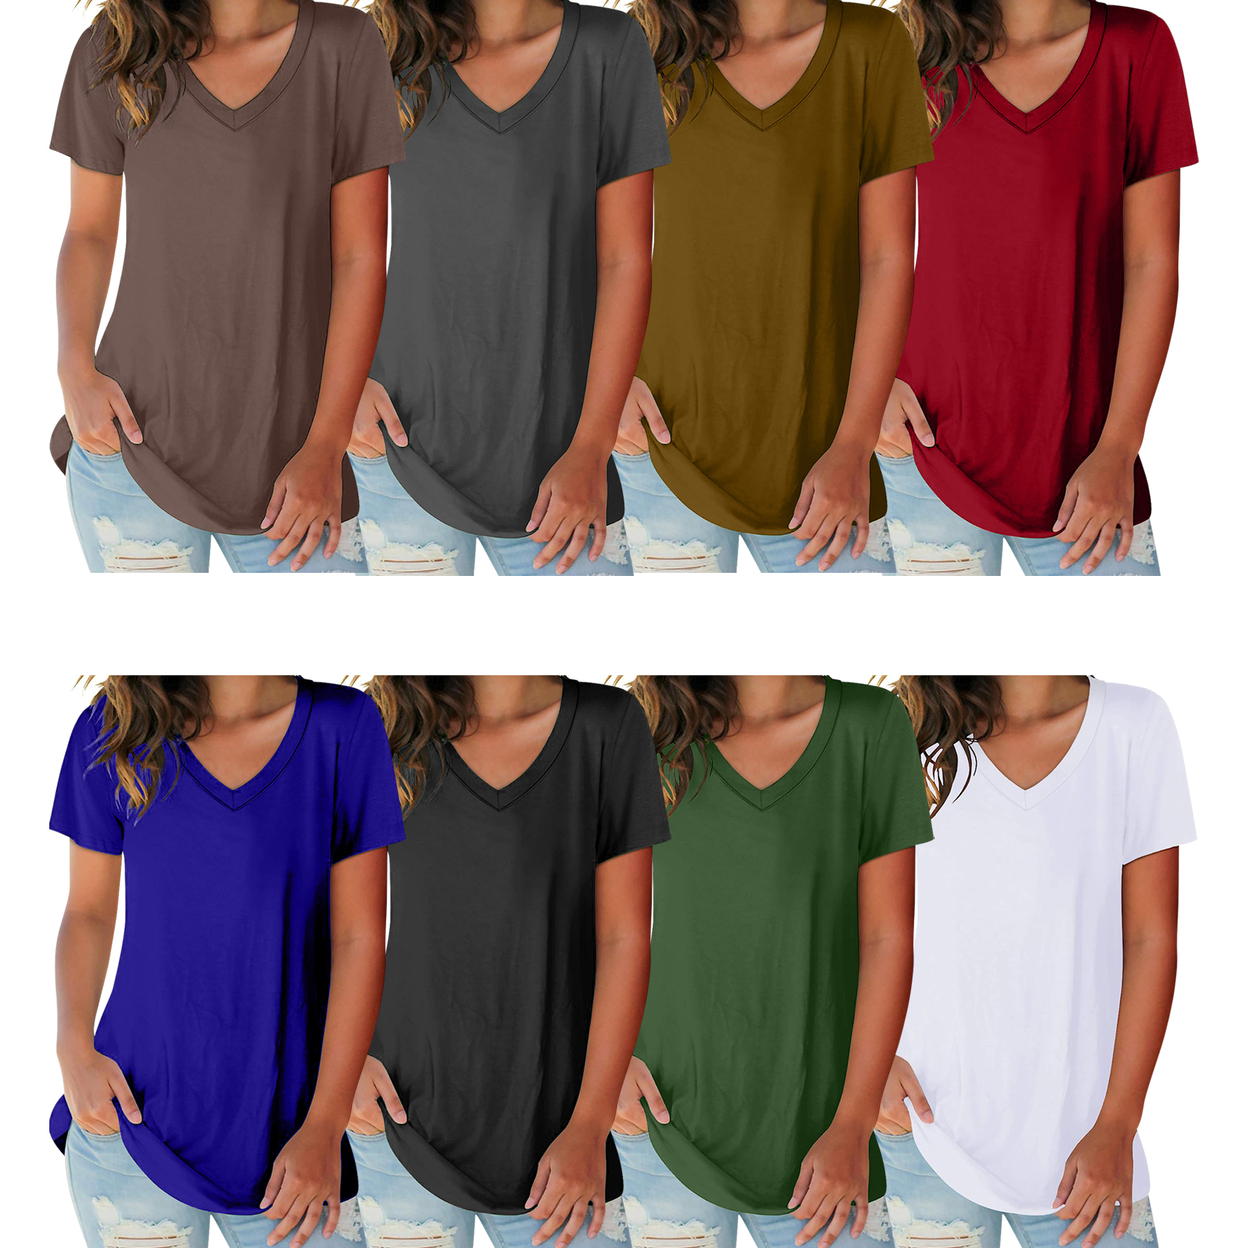 3-Pack: Women's Ultra Soft Smooth Cotton Blend Basic V-Neck Short Sleeve Shirts - Black, Grey, Green, X-large